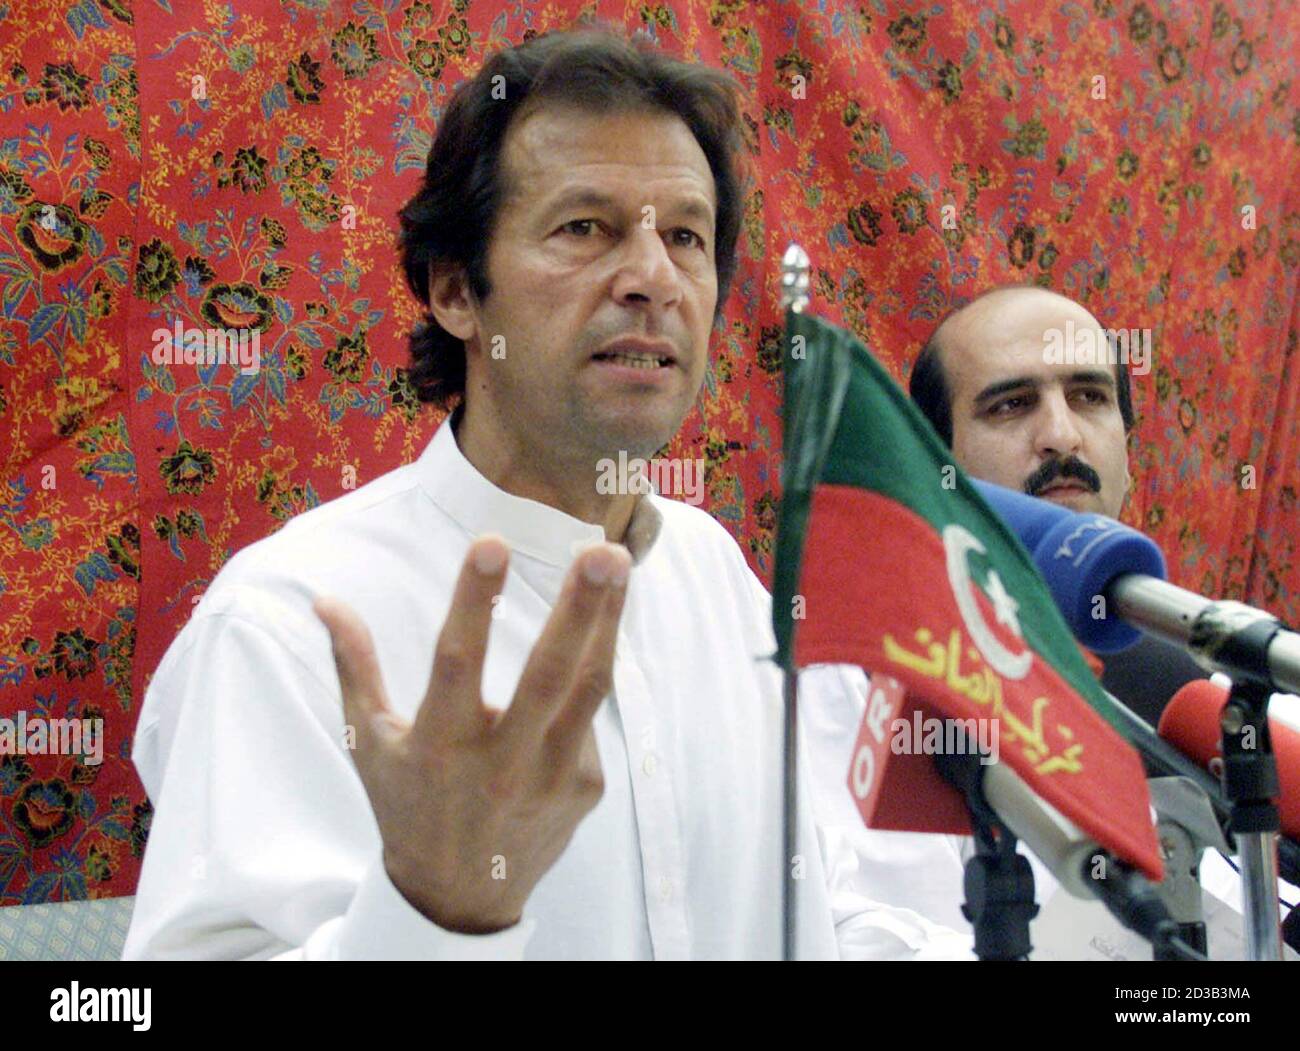 Khan news imran Pakistan: Imran